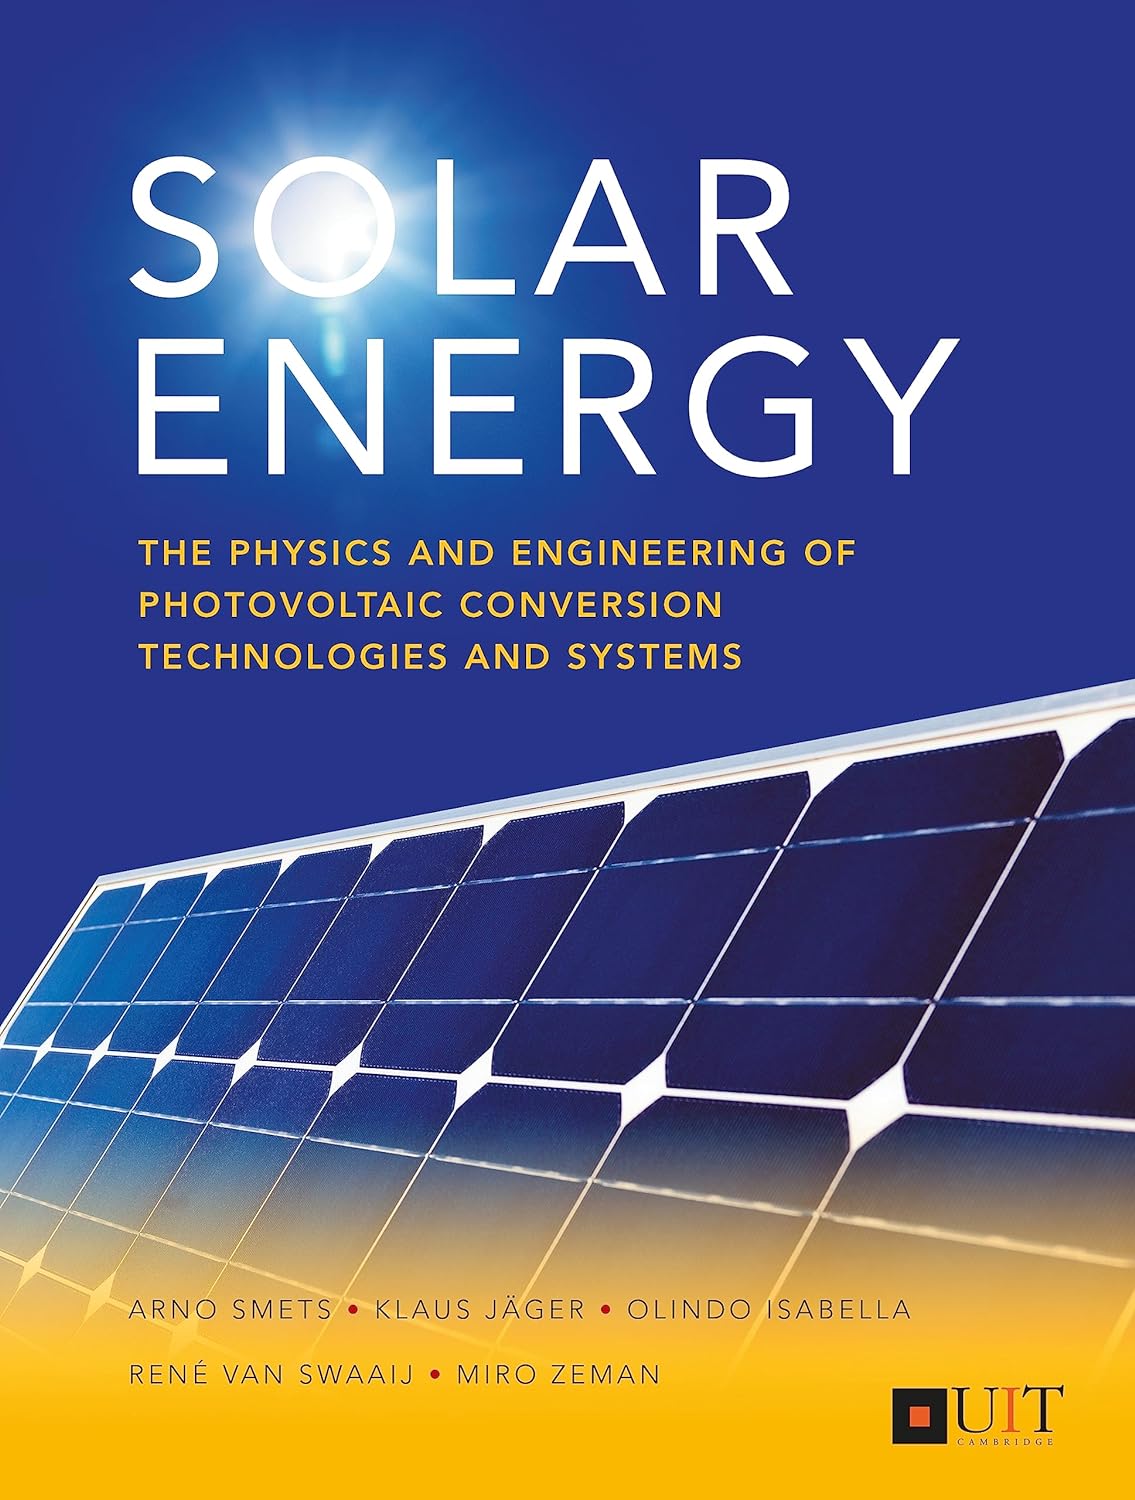 solar energy book review